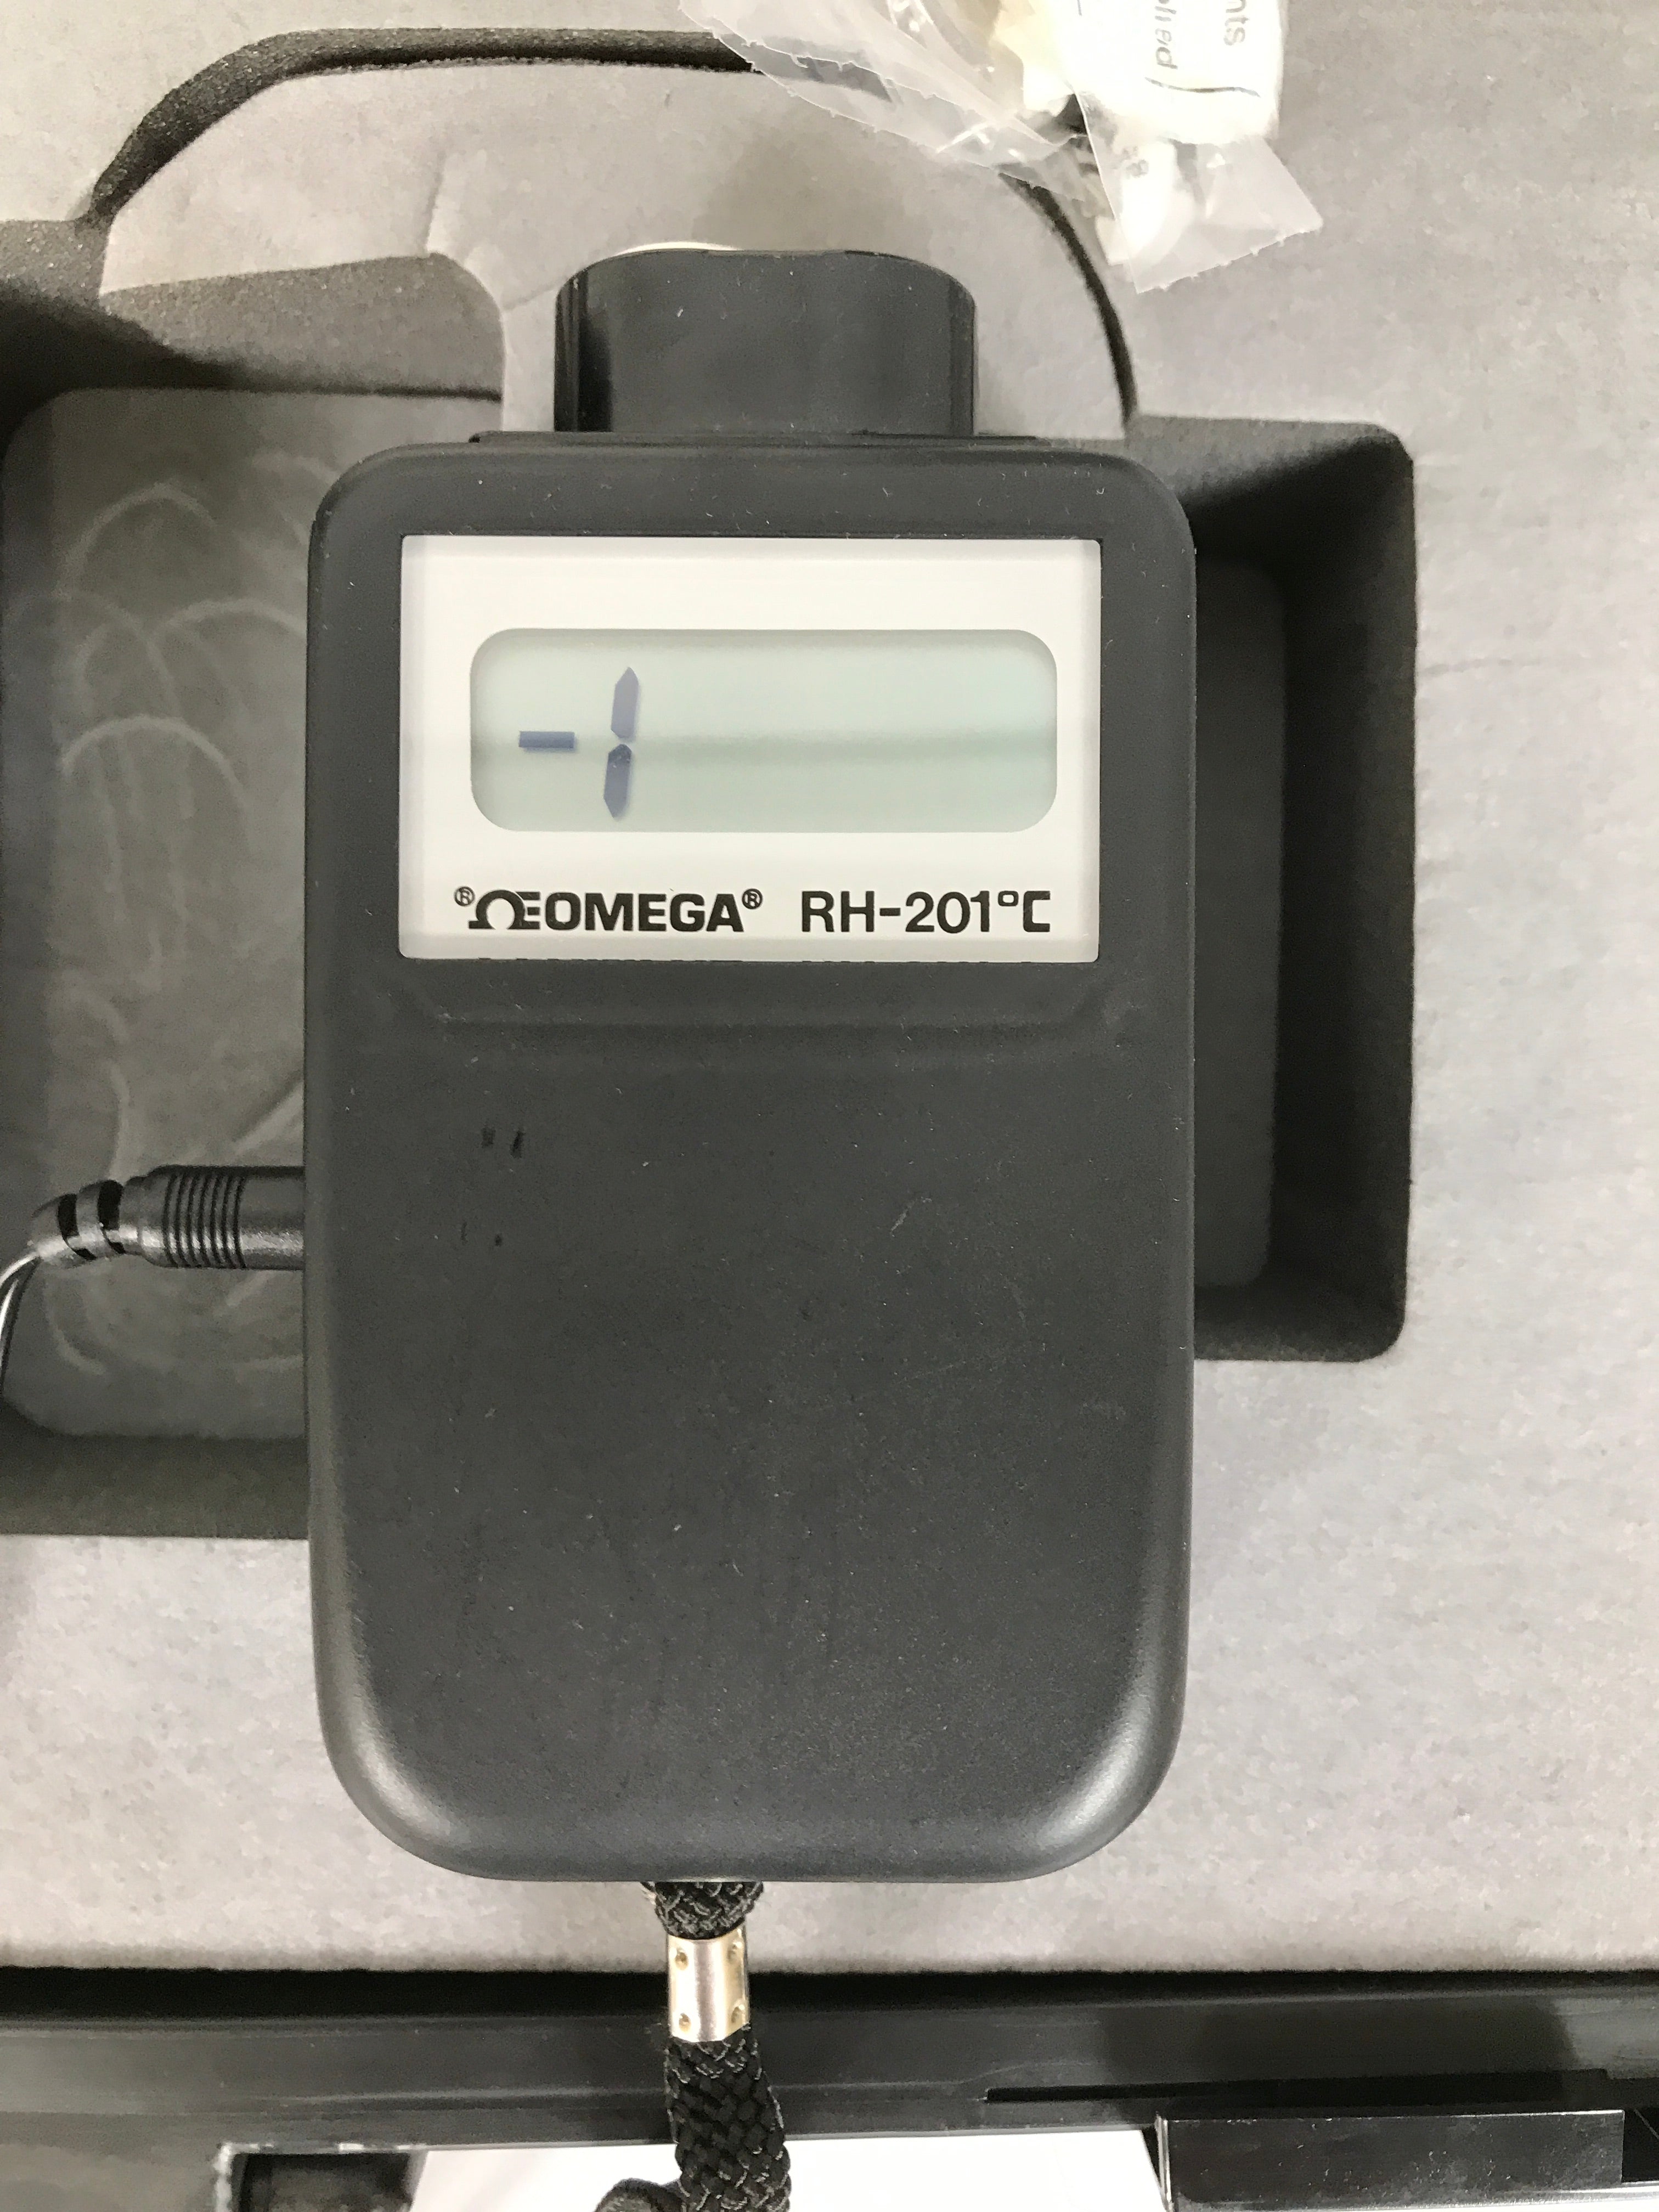 OMEGA RH200 Hand Held Hygrometer & RH201 Humidity Measuring Kit